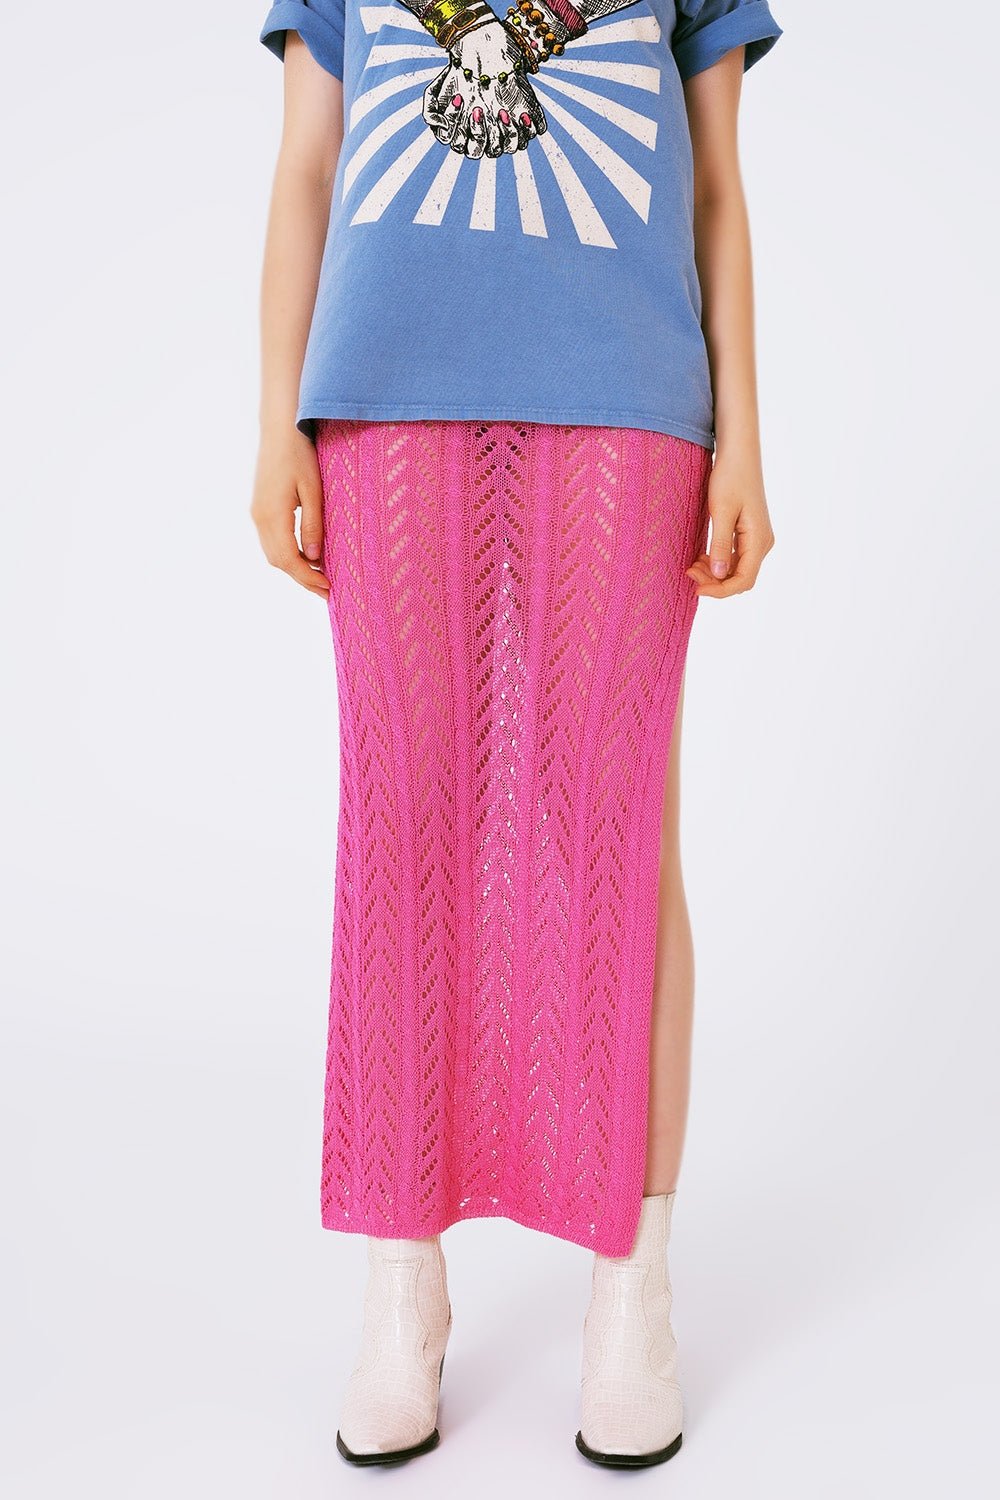 Crochet Maxi Skirt in Pink - Mack & Harvie